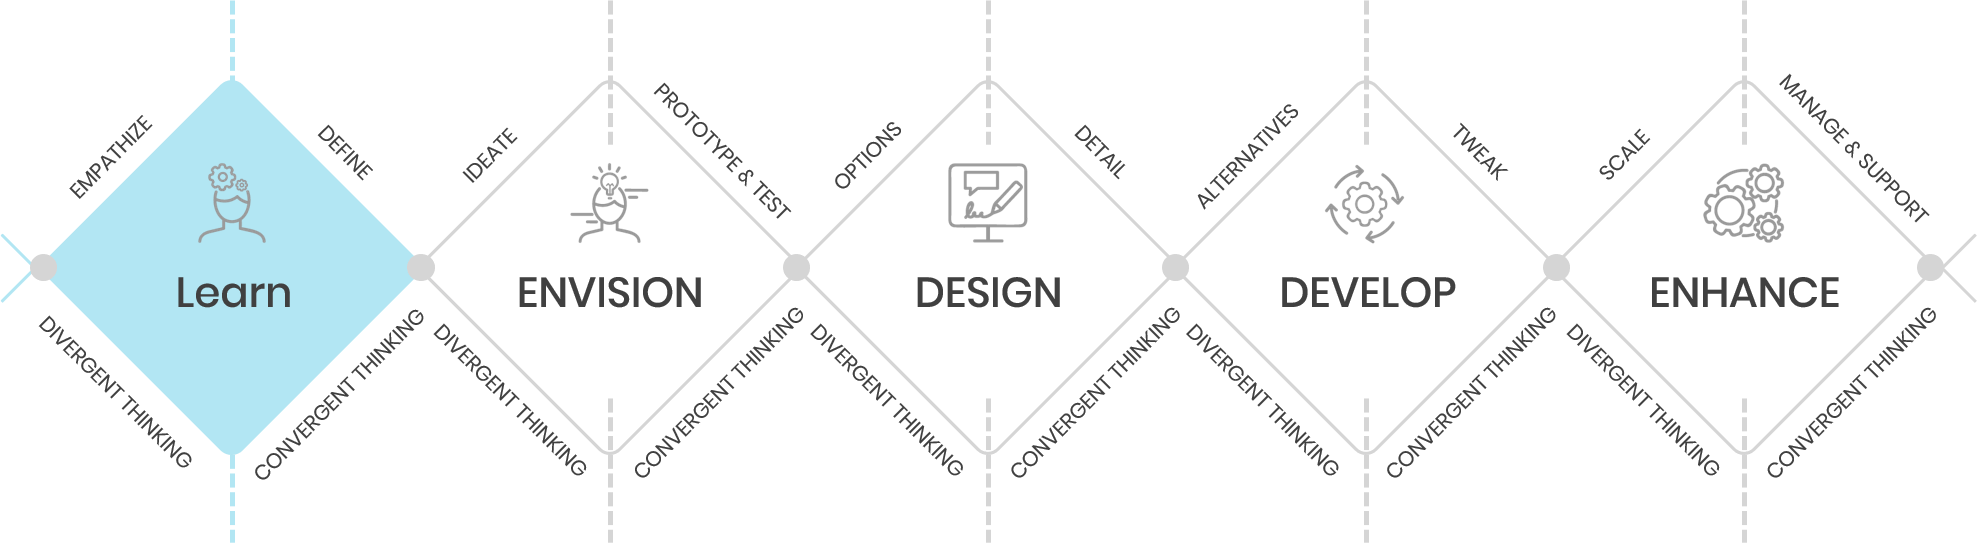 graphic describing Trianz’ design methodology of learn envision design develop enhance